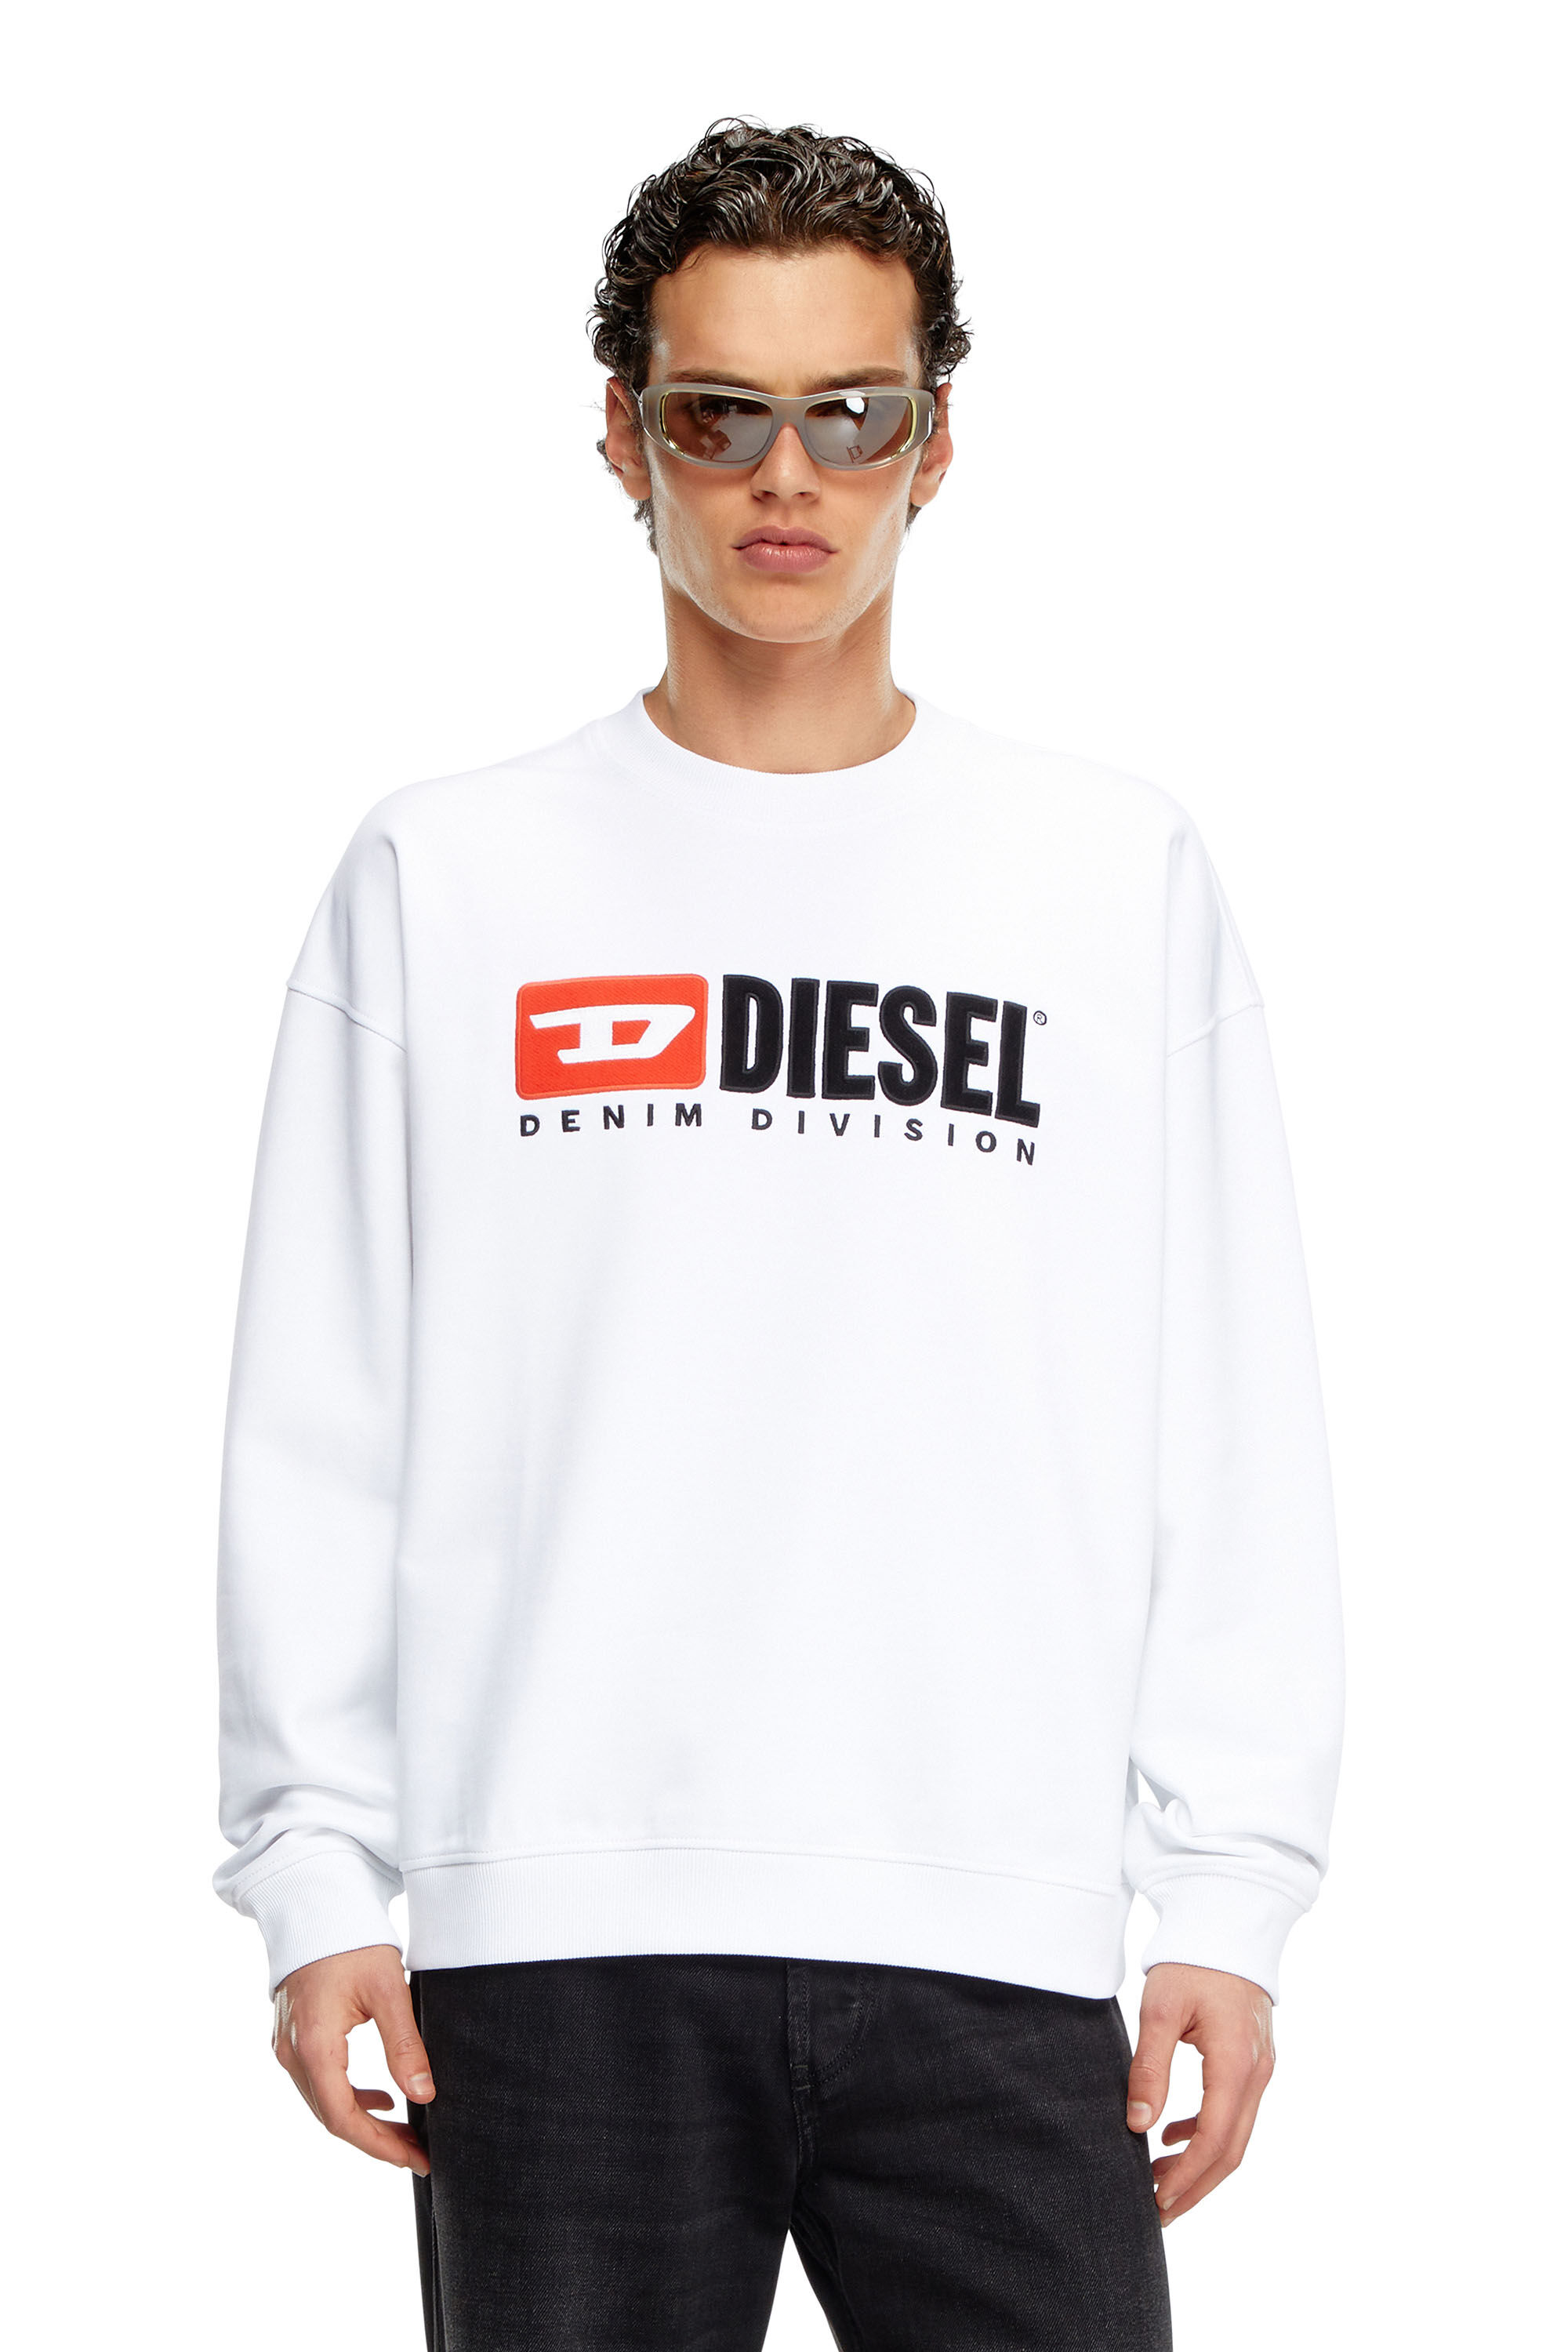 Diesel - S-BOXT-DIV, Hombre Sudadera con logotipo Denim Division in Blanco - Image 3